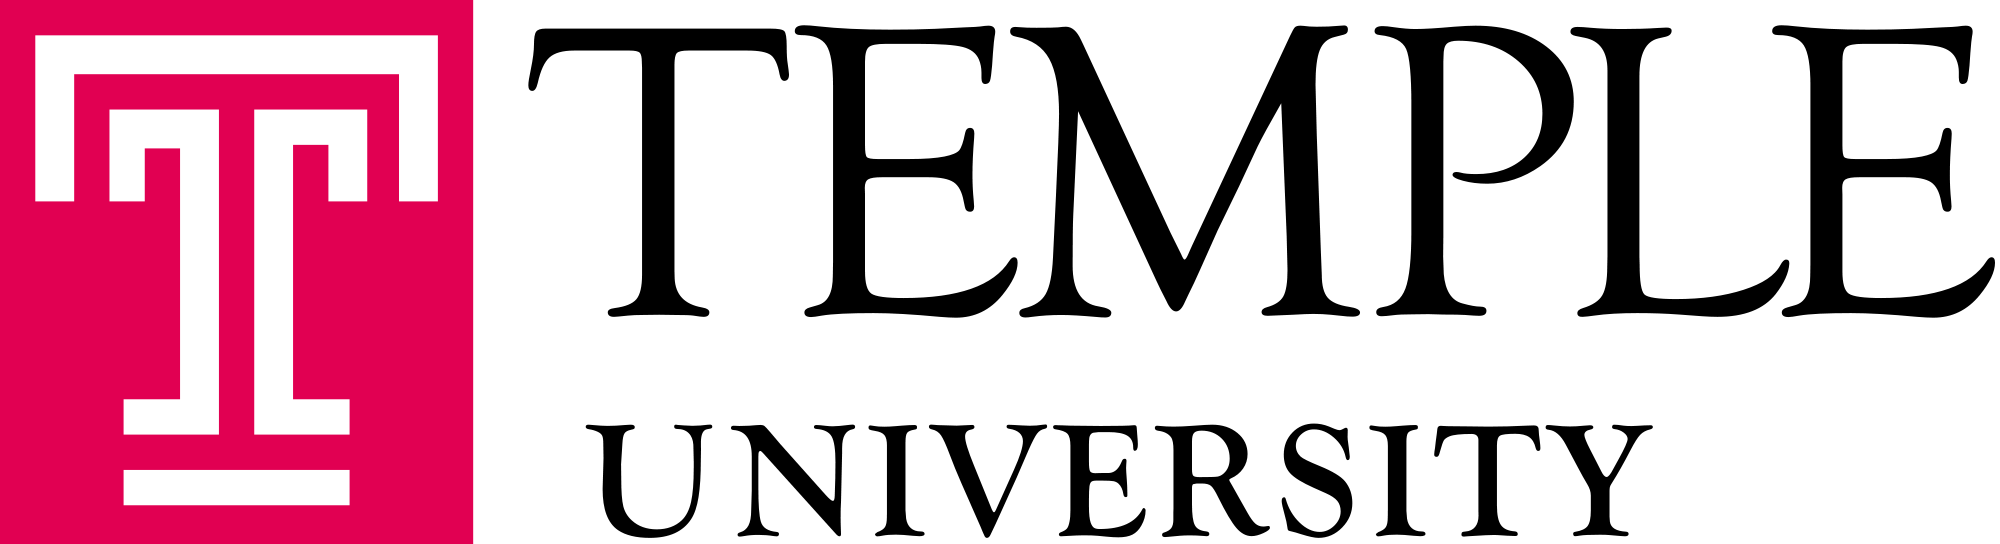 Temple Text Logo - Temple University Logo Clipart (2000x544), Png Download